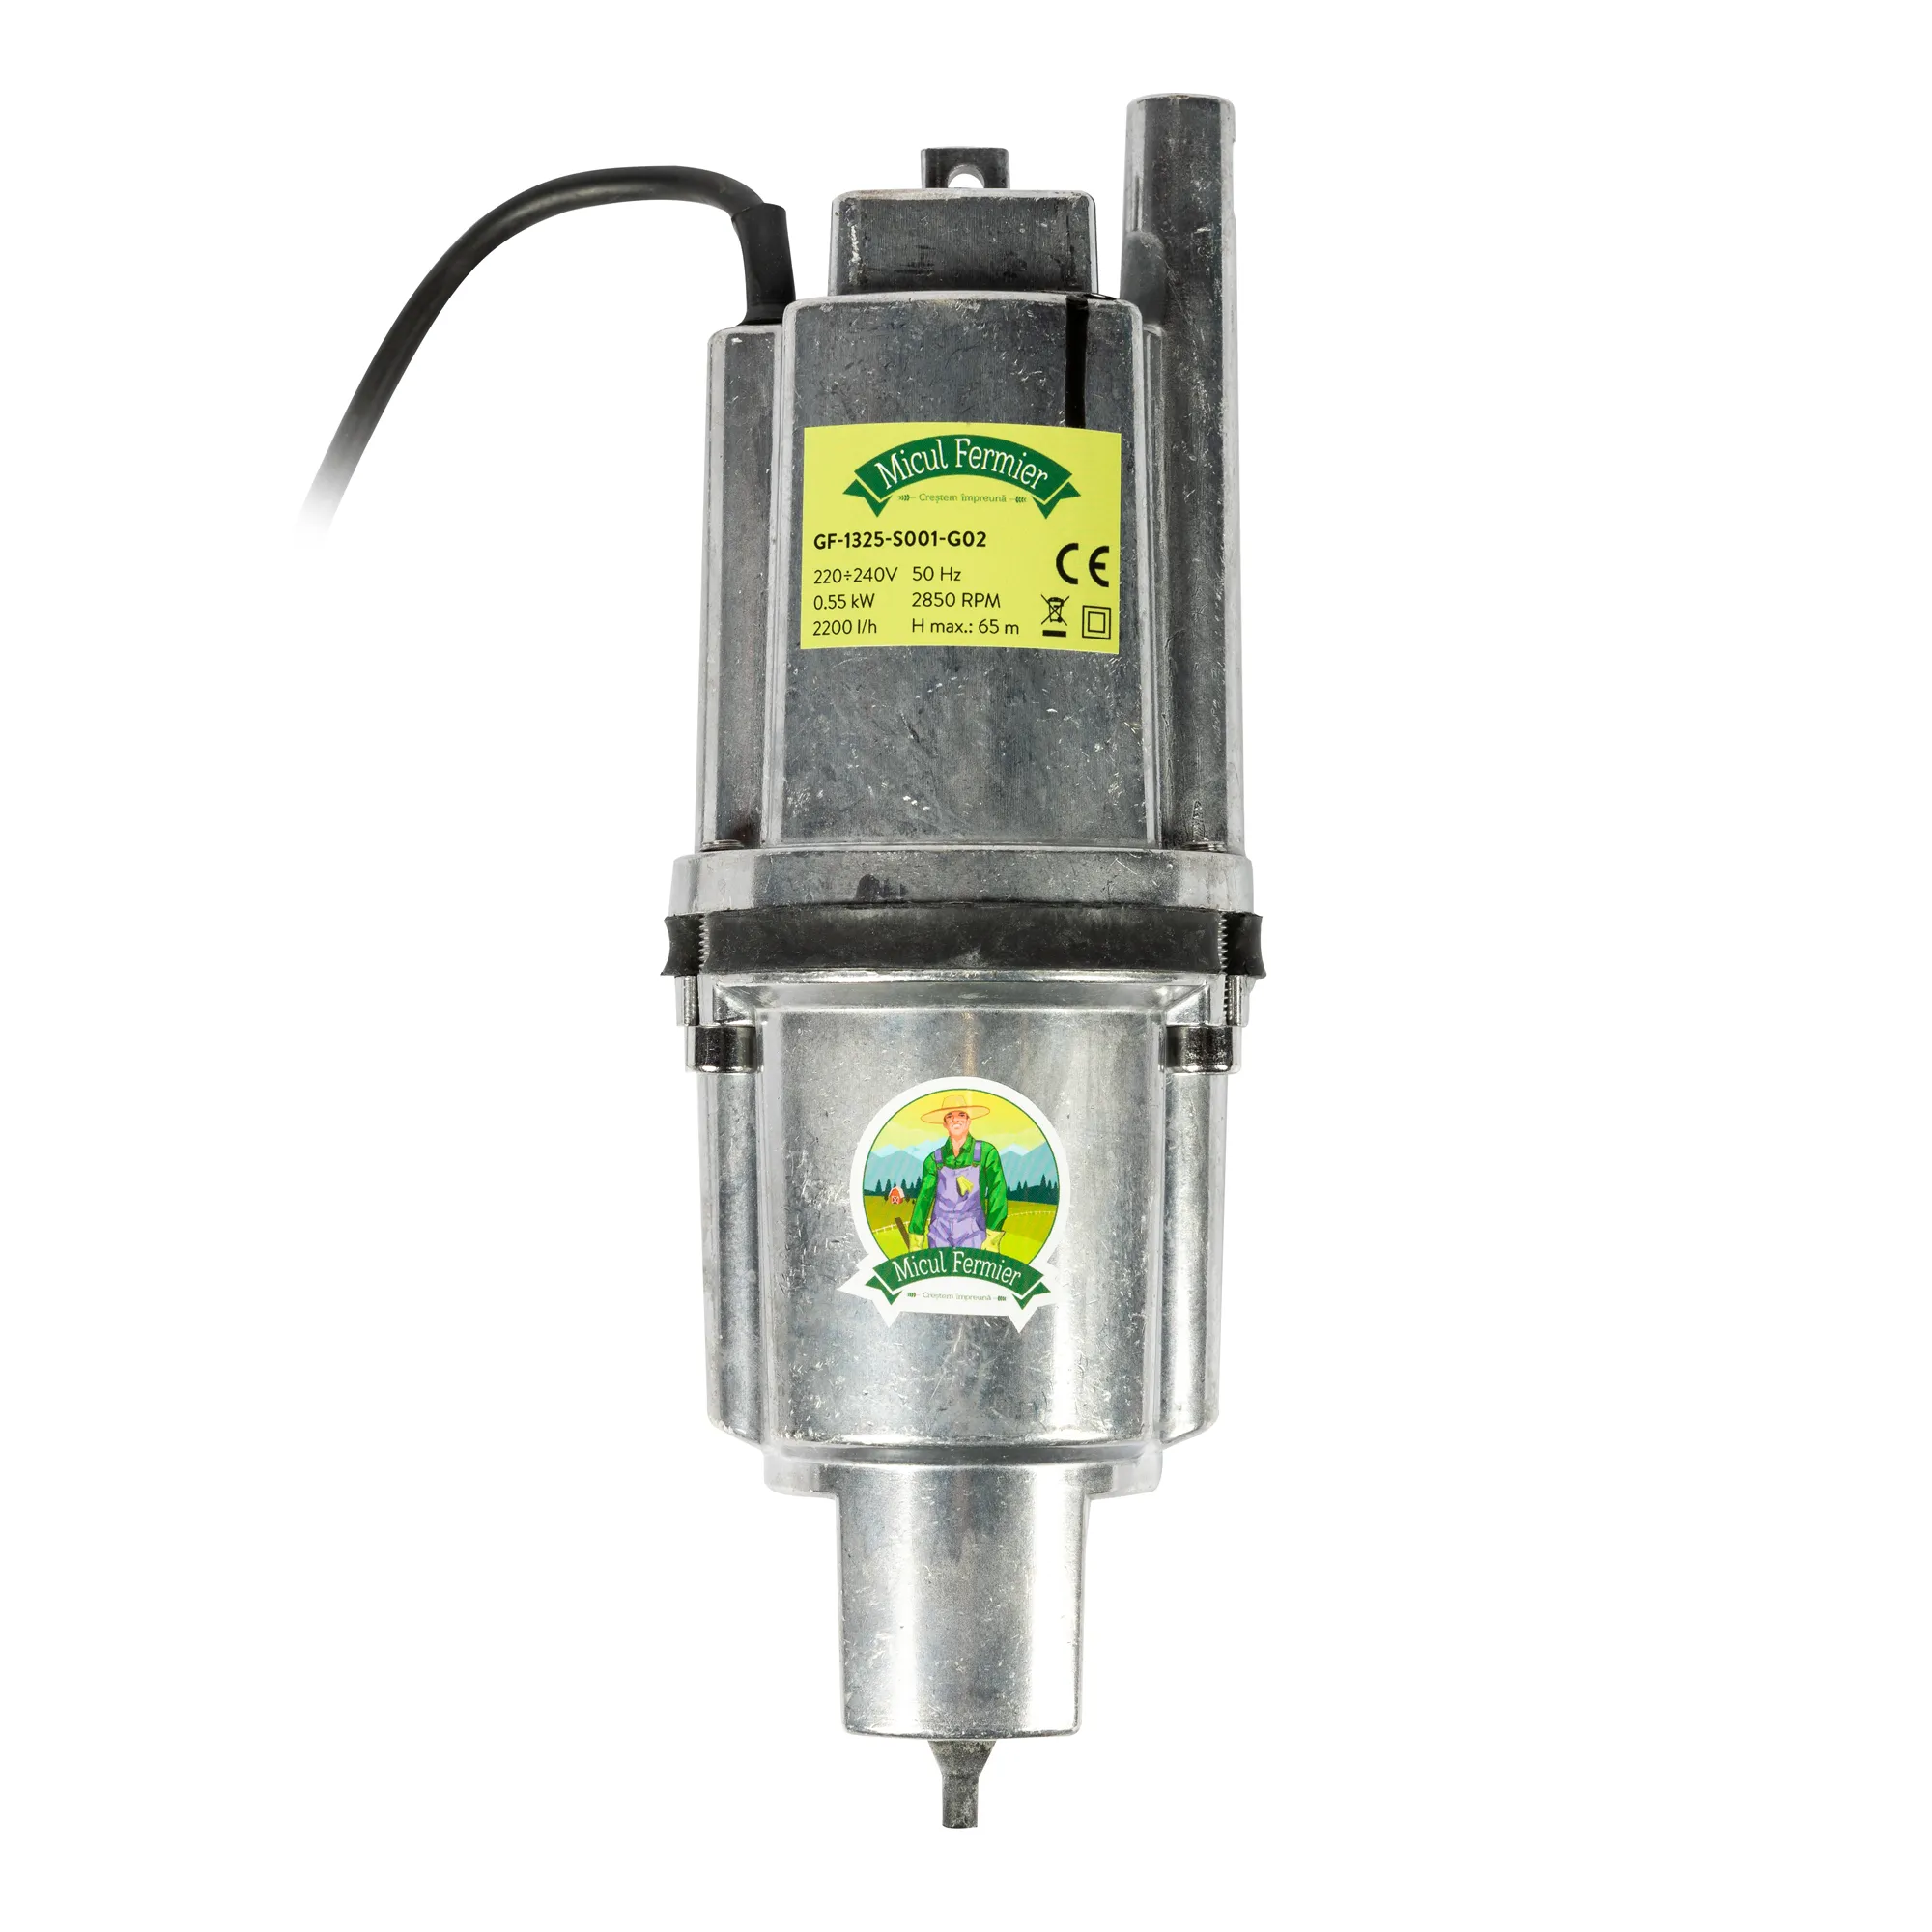 Pompa submersibila vibratie Micul Fermier 550W 2200l/h 